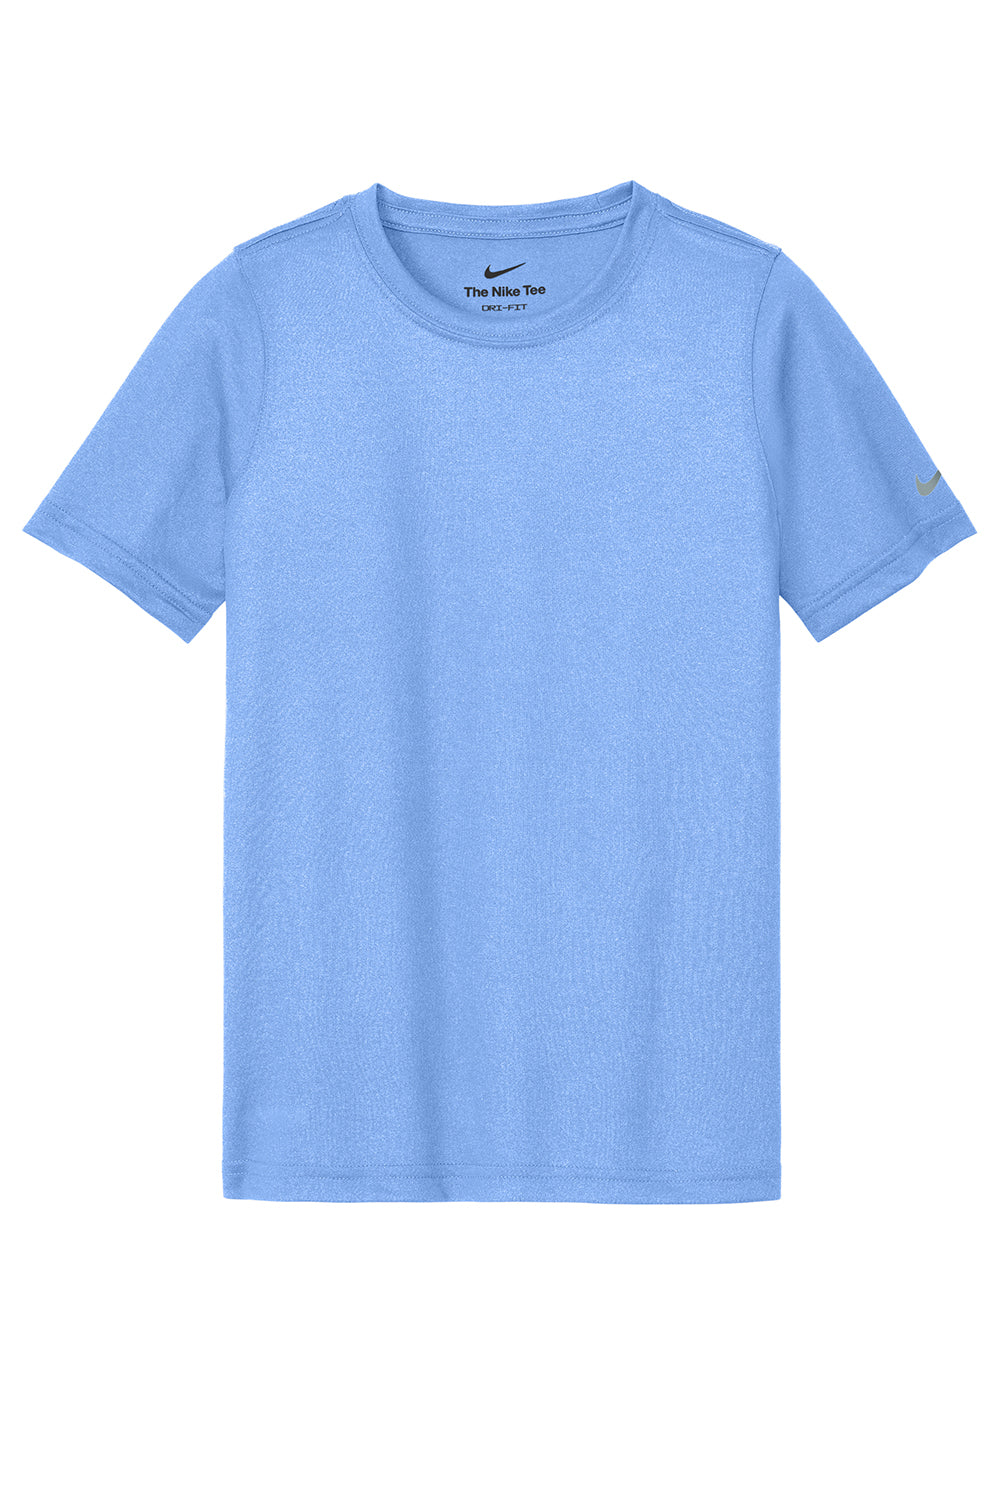 Nike NKDX8787 Youth rLegend Dri-Fit Moisture Wicking Short Sleeve Crewneck T-Shirt Valor Blue Flat Front